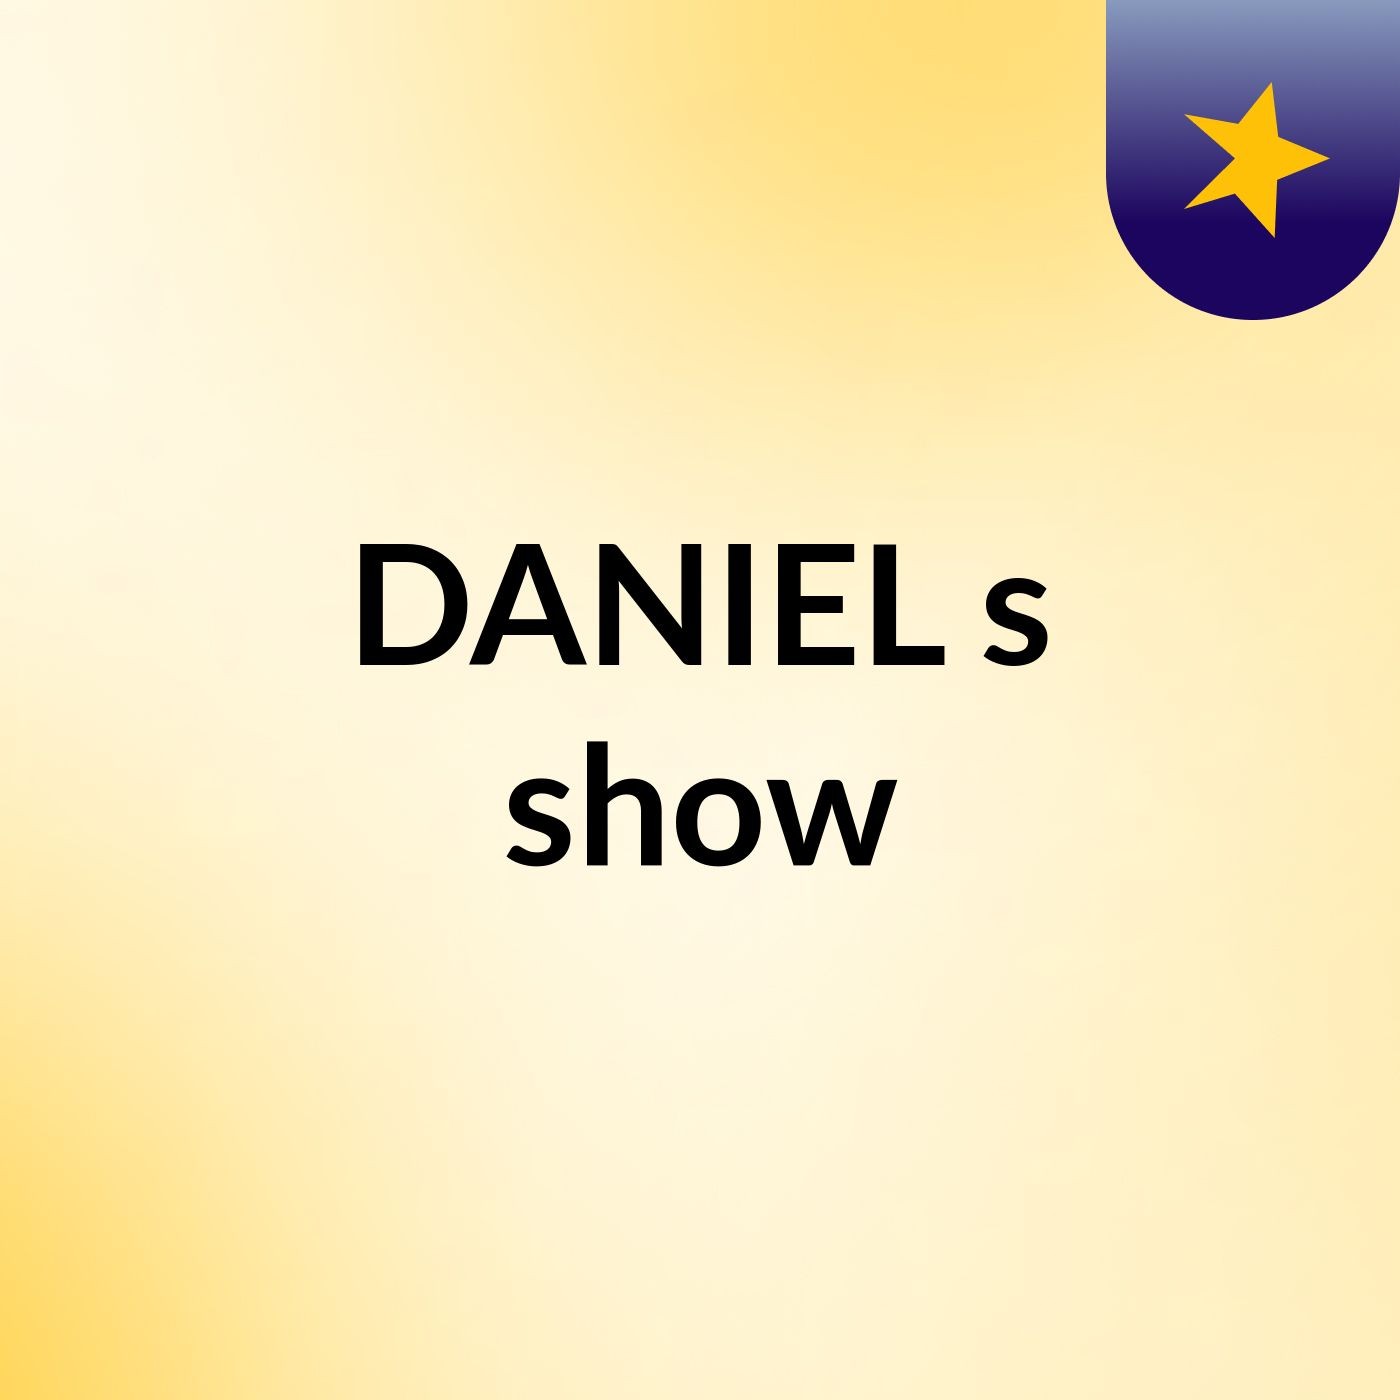 DANIEL's show